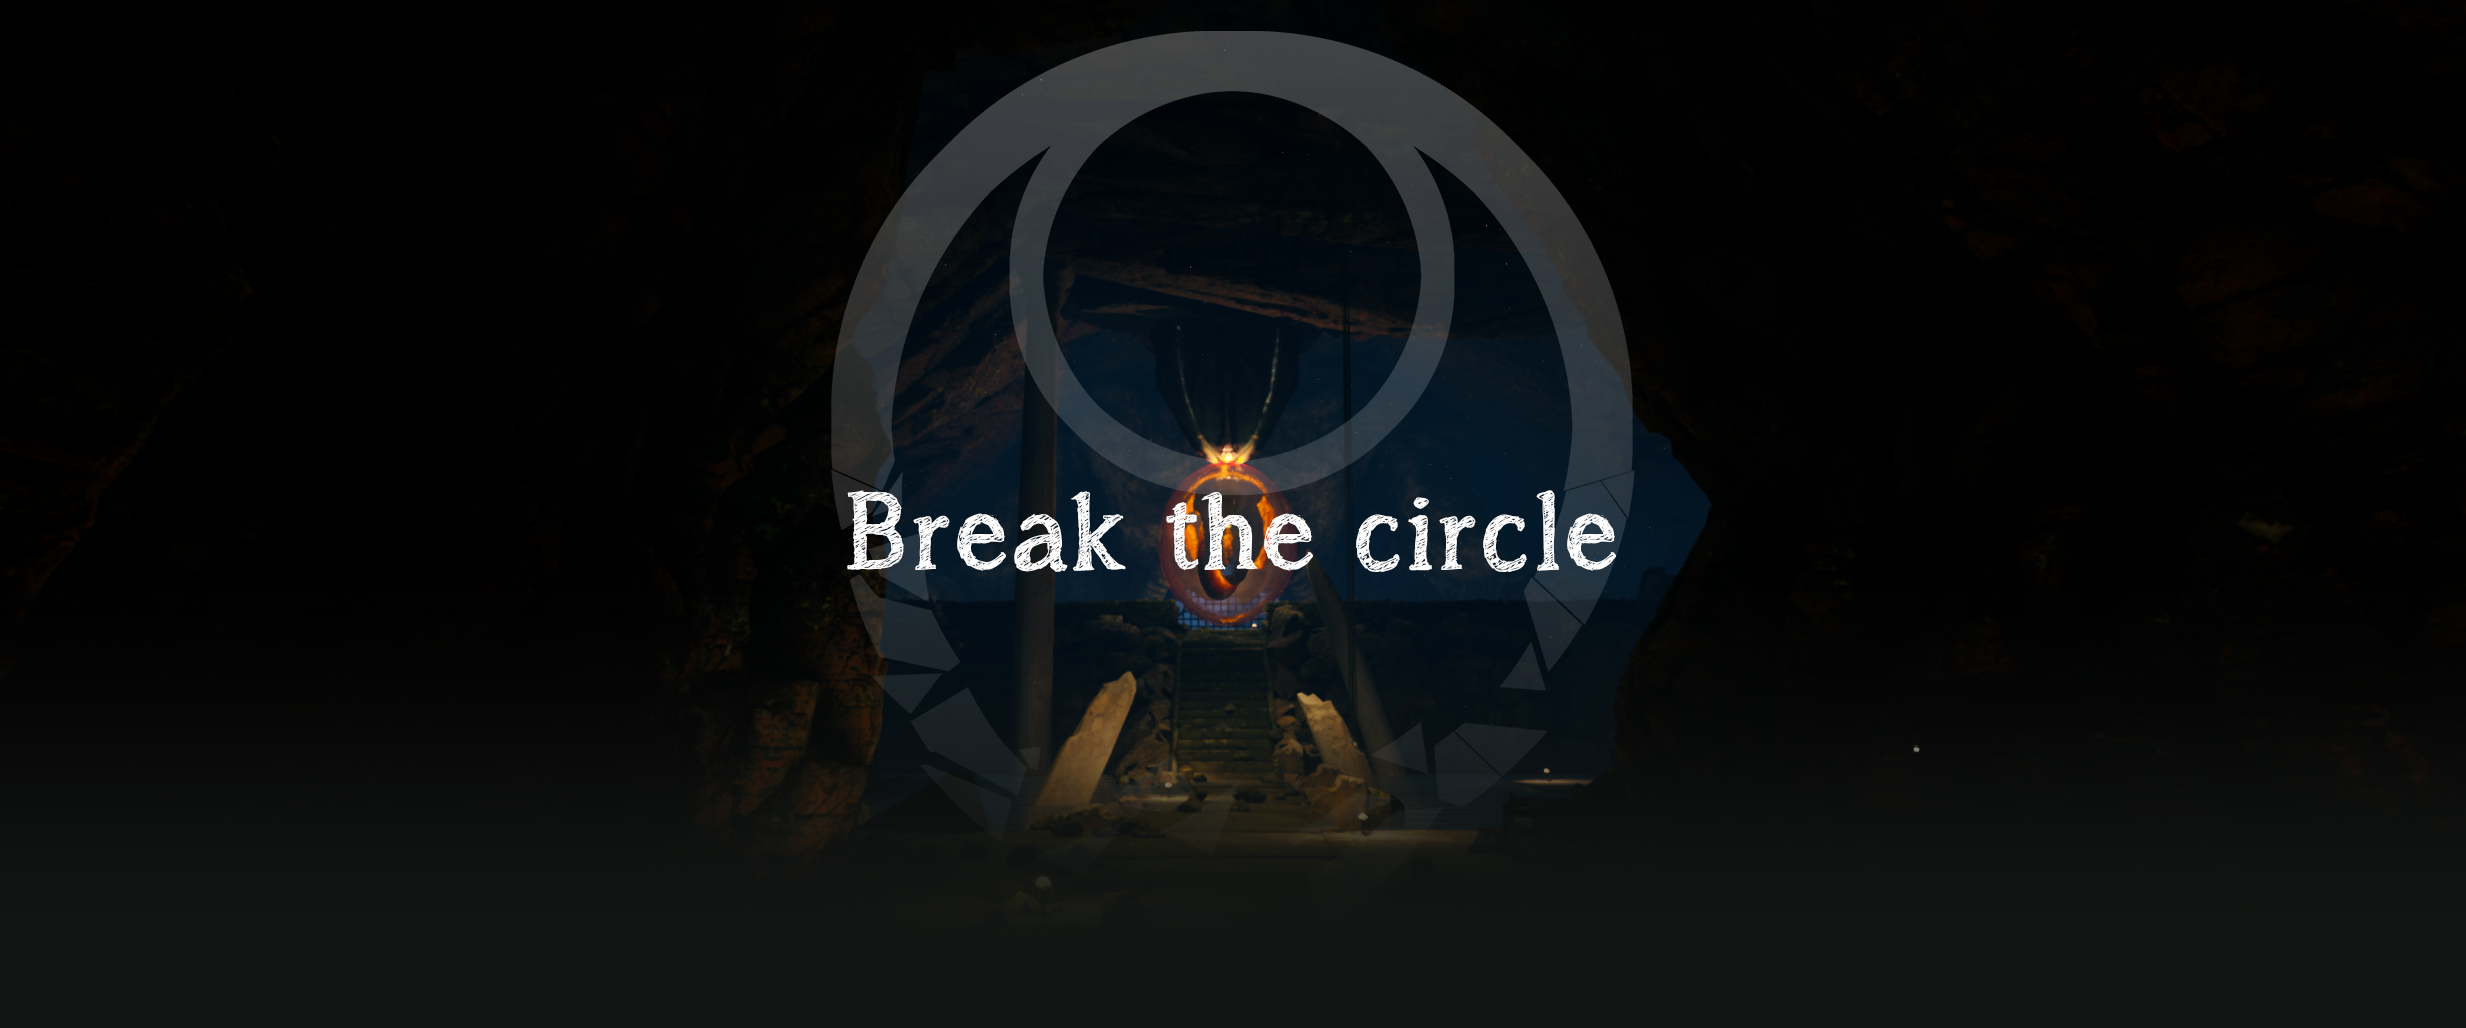 Break the circle